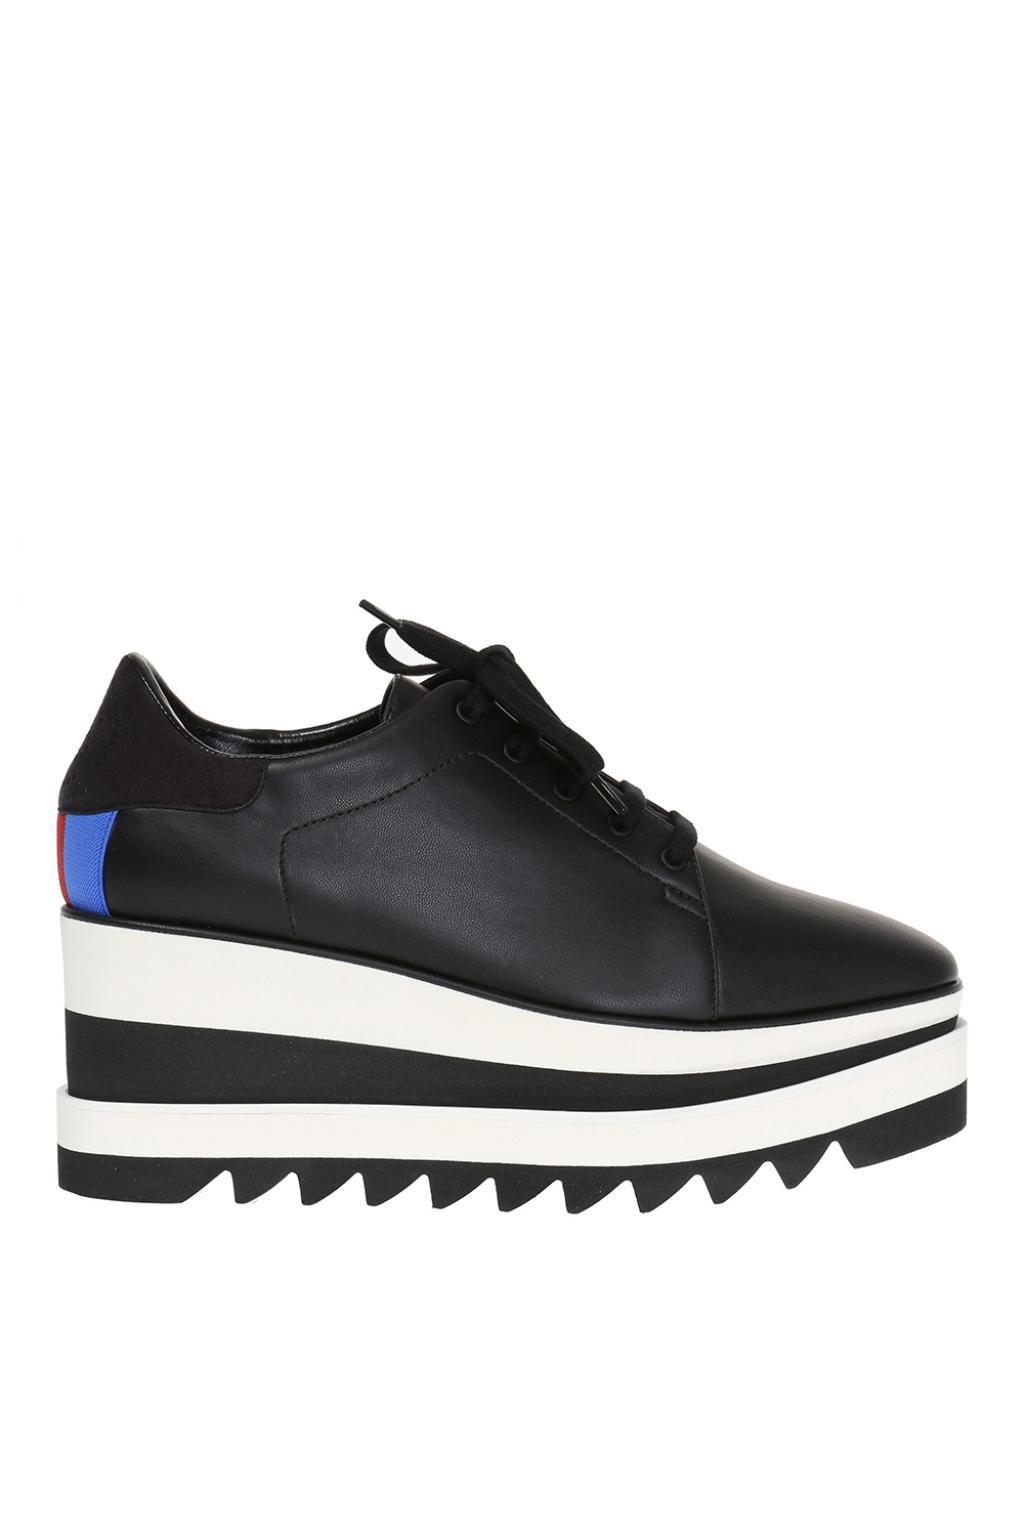 Lyst - Stella Mccartney 'elyse' Platform Shoes in Black - Save 63. ...